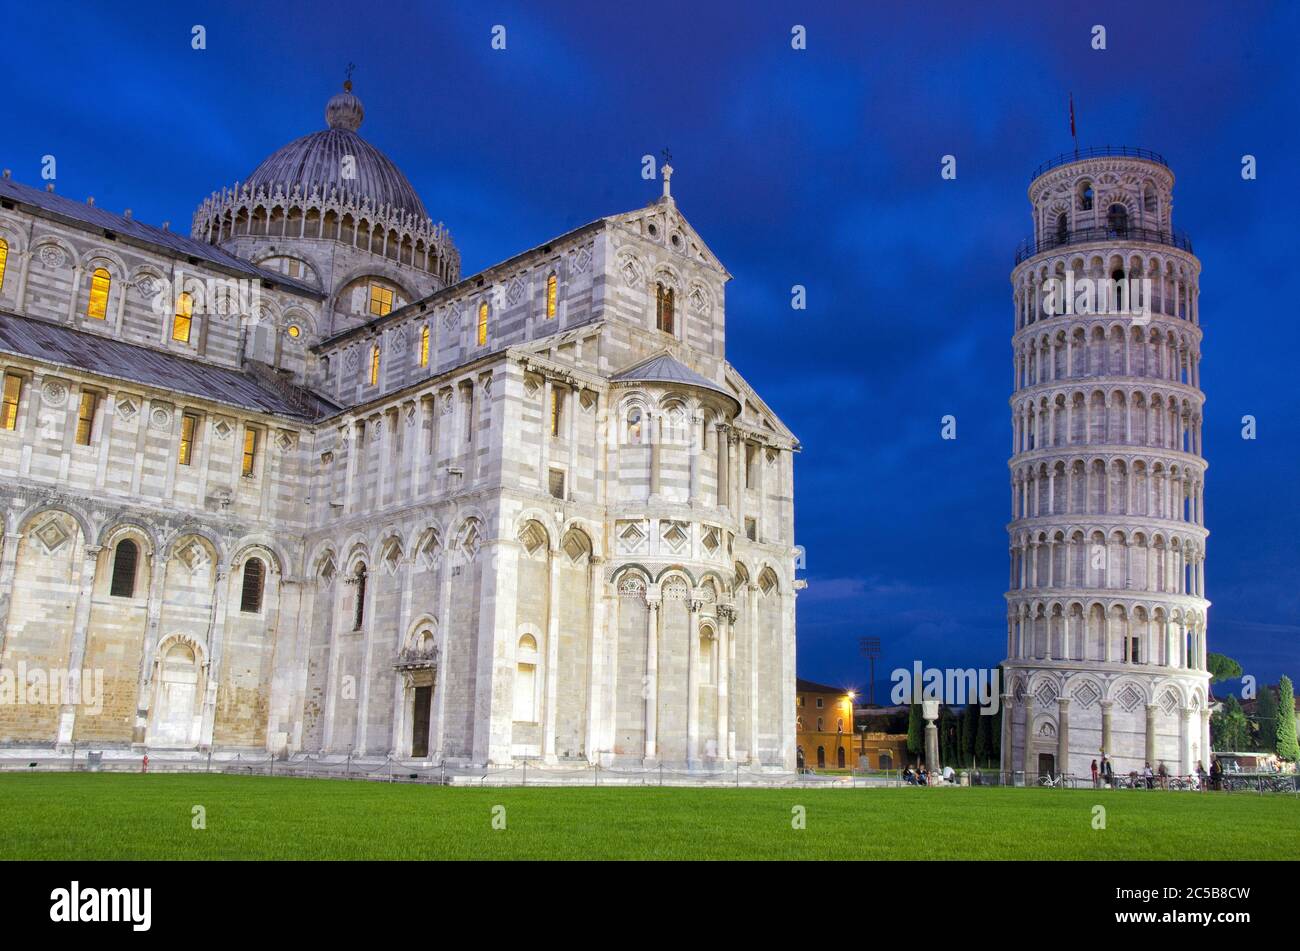 Vista nocturna de la Catedral de Pisa (Duomo di Pisa) con la Torre inclinada de Pisa (Torre di Pisa) en la Piazza dei Miracoli en Pisa, Toscana, Italia Foto de stock